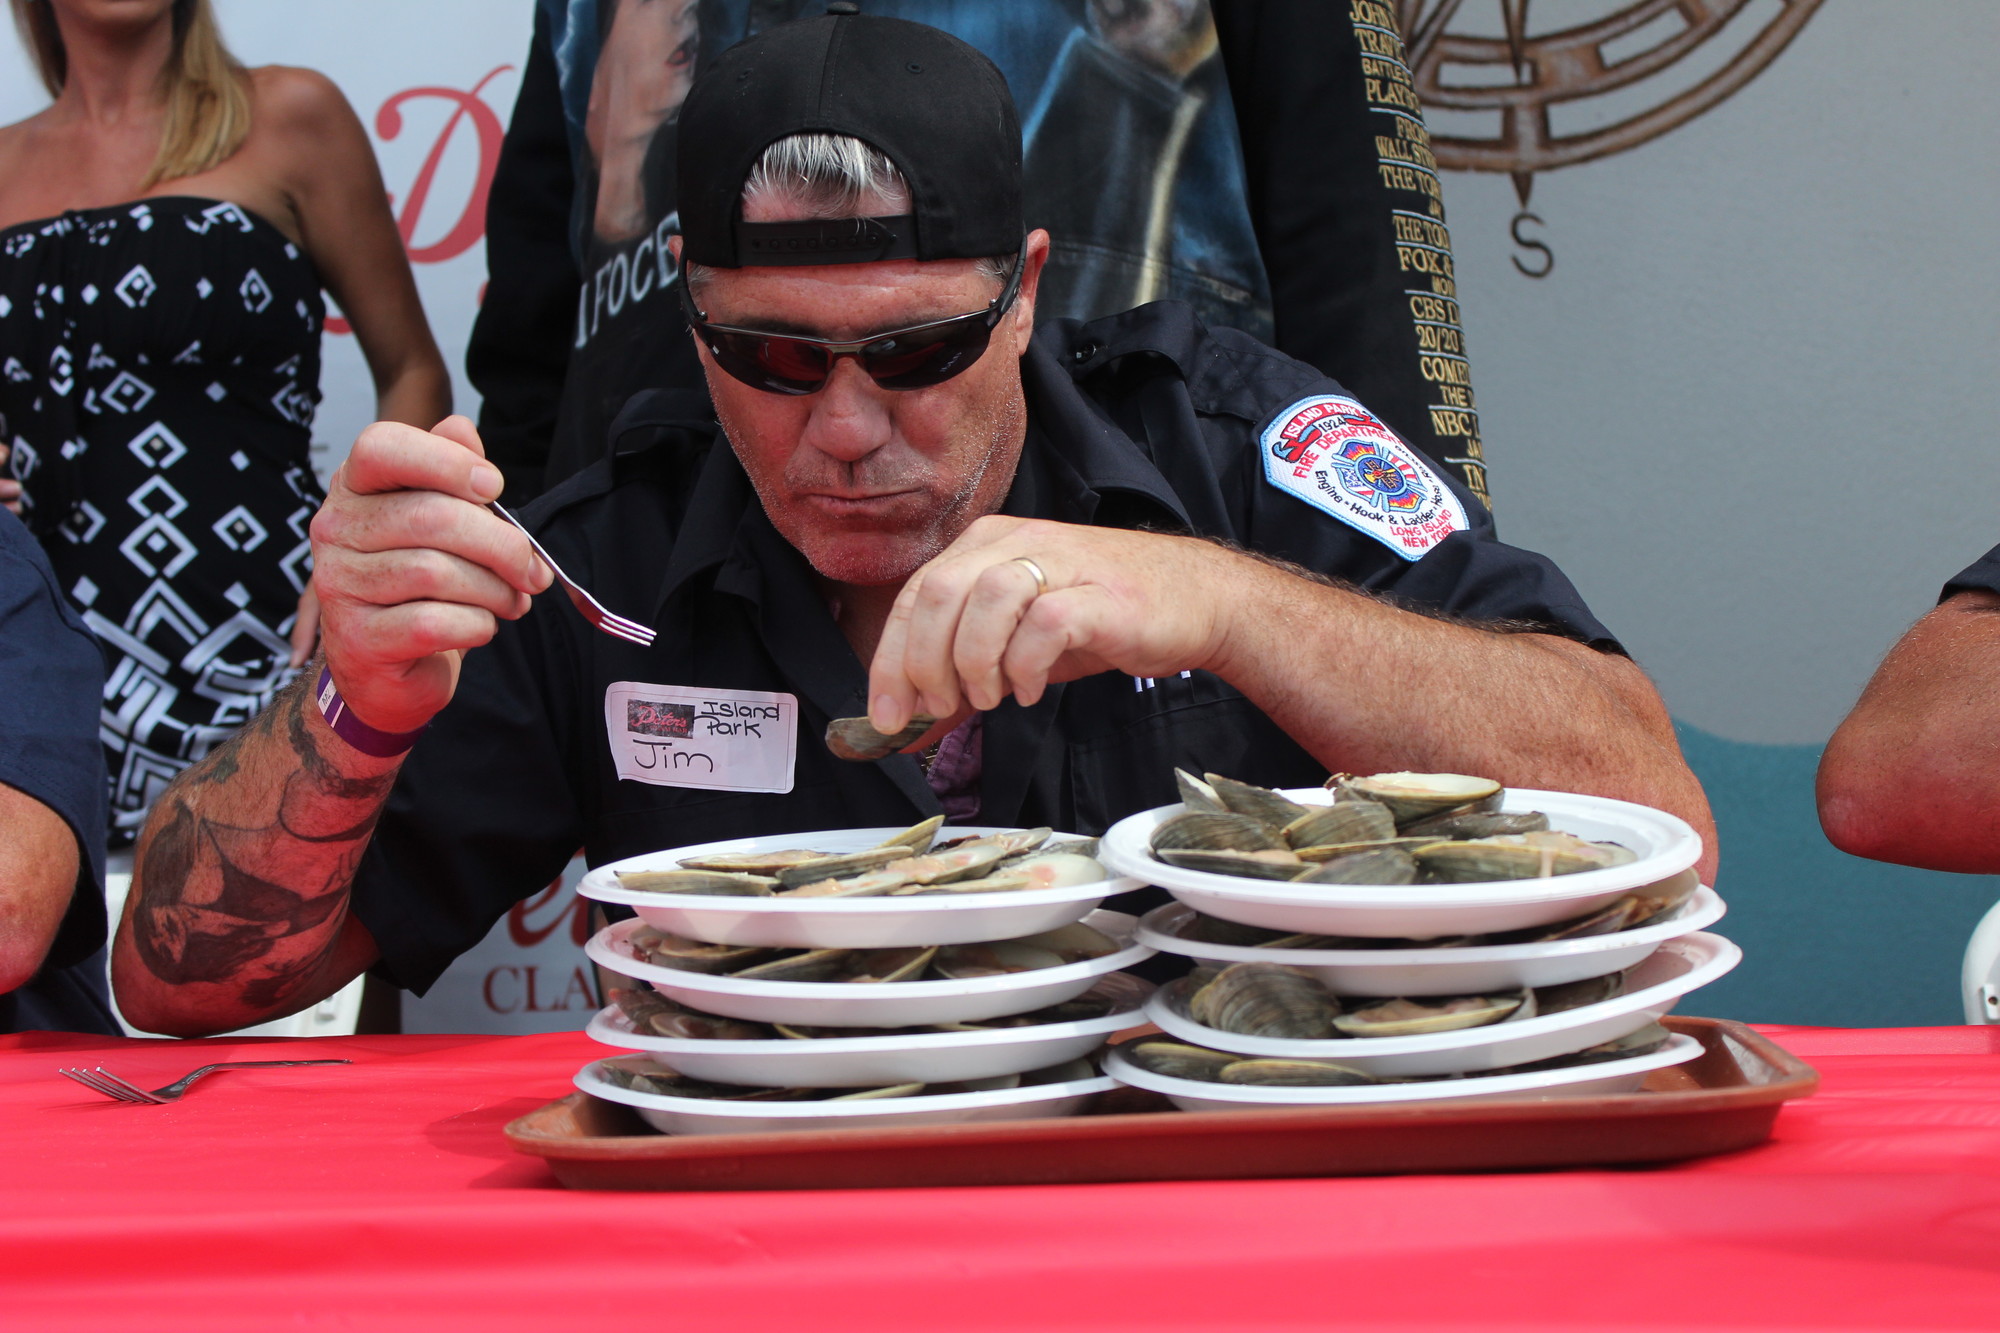 Jim Sarro dug into the pile of eight-dozen clams, representing Island Park Fire Department.